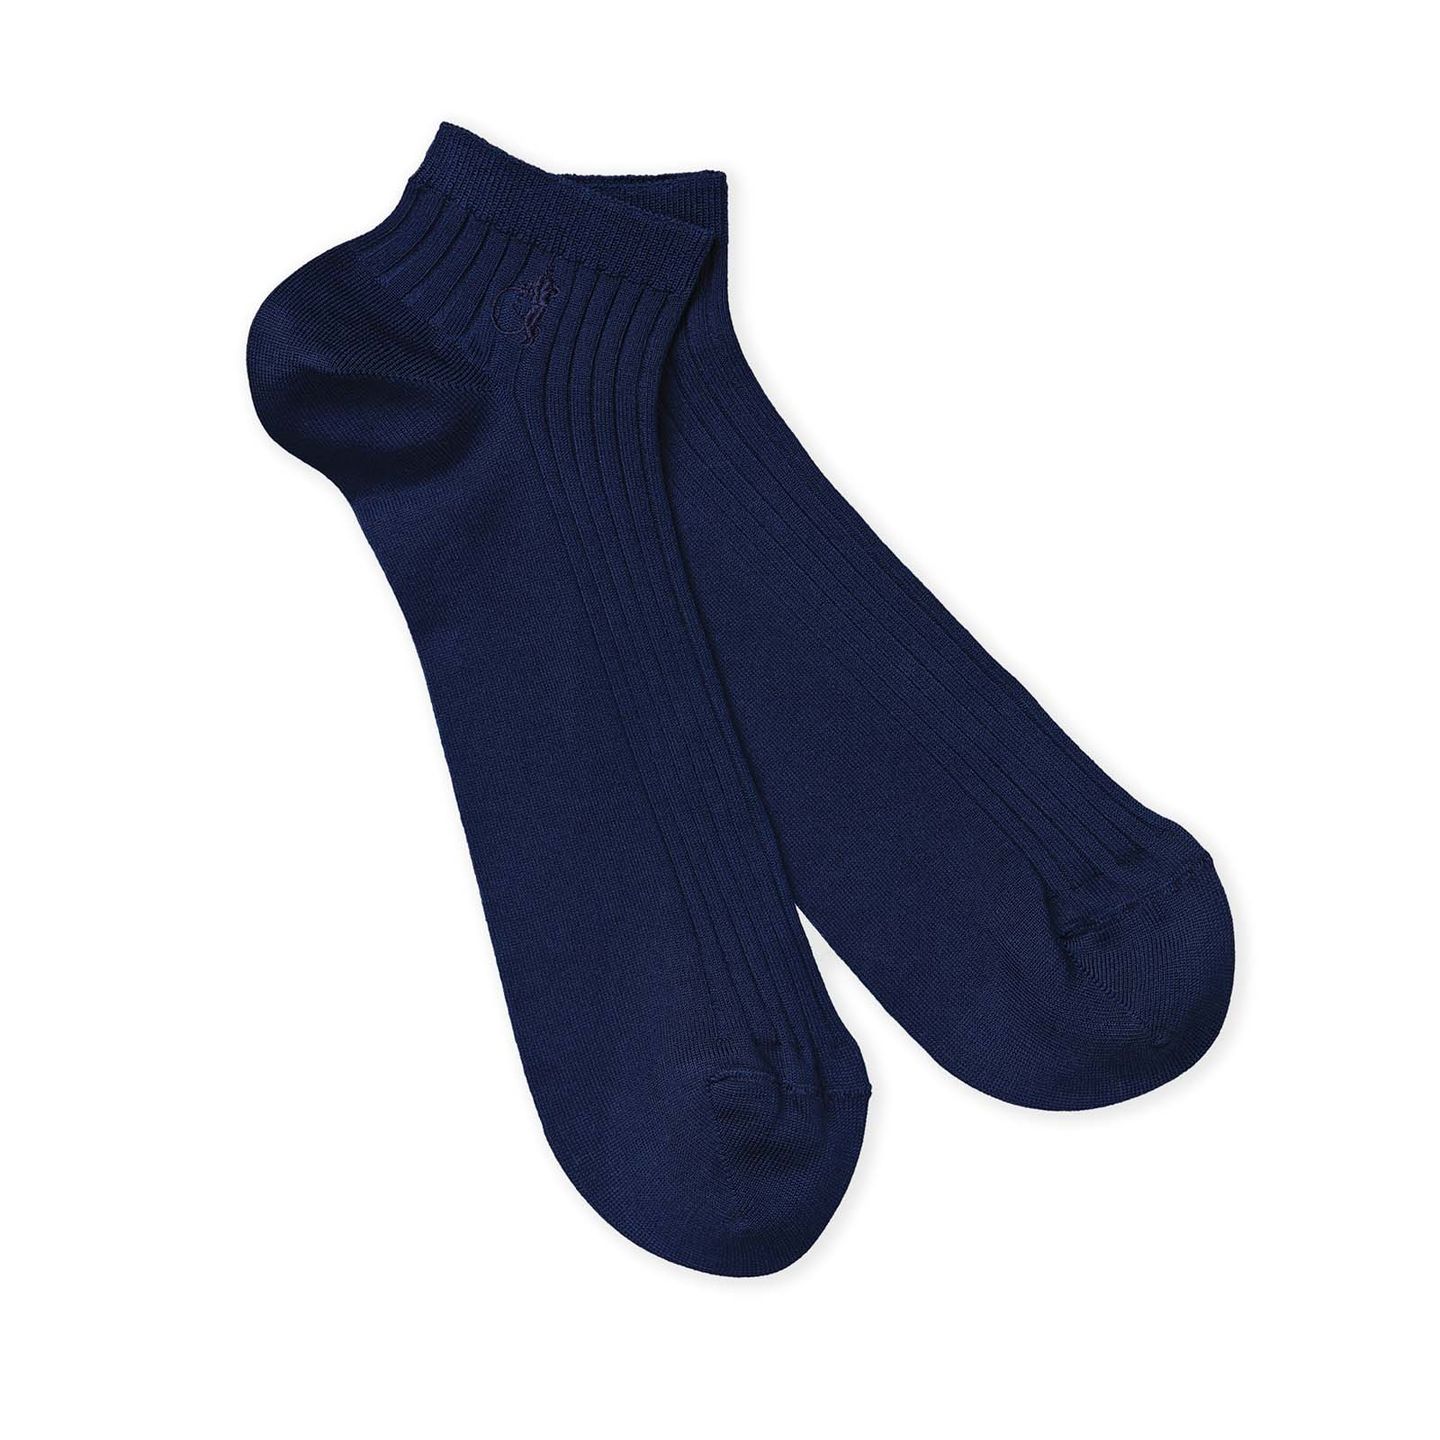 Navy trainers socks